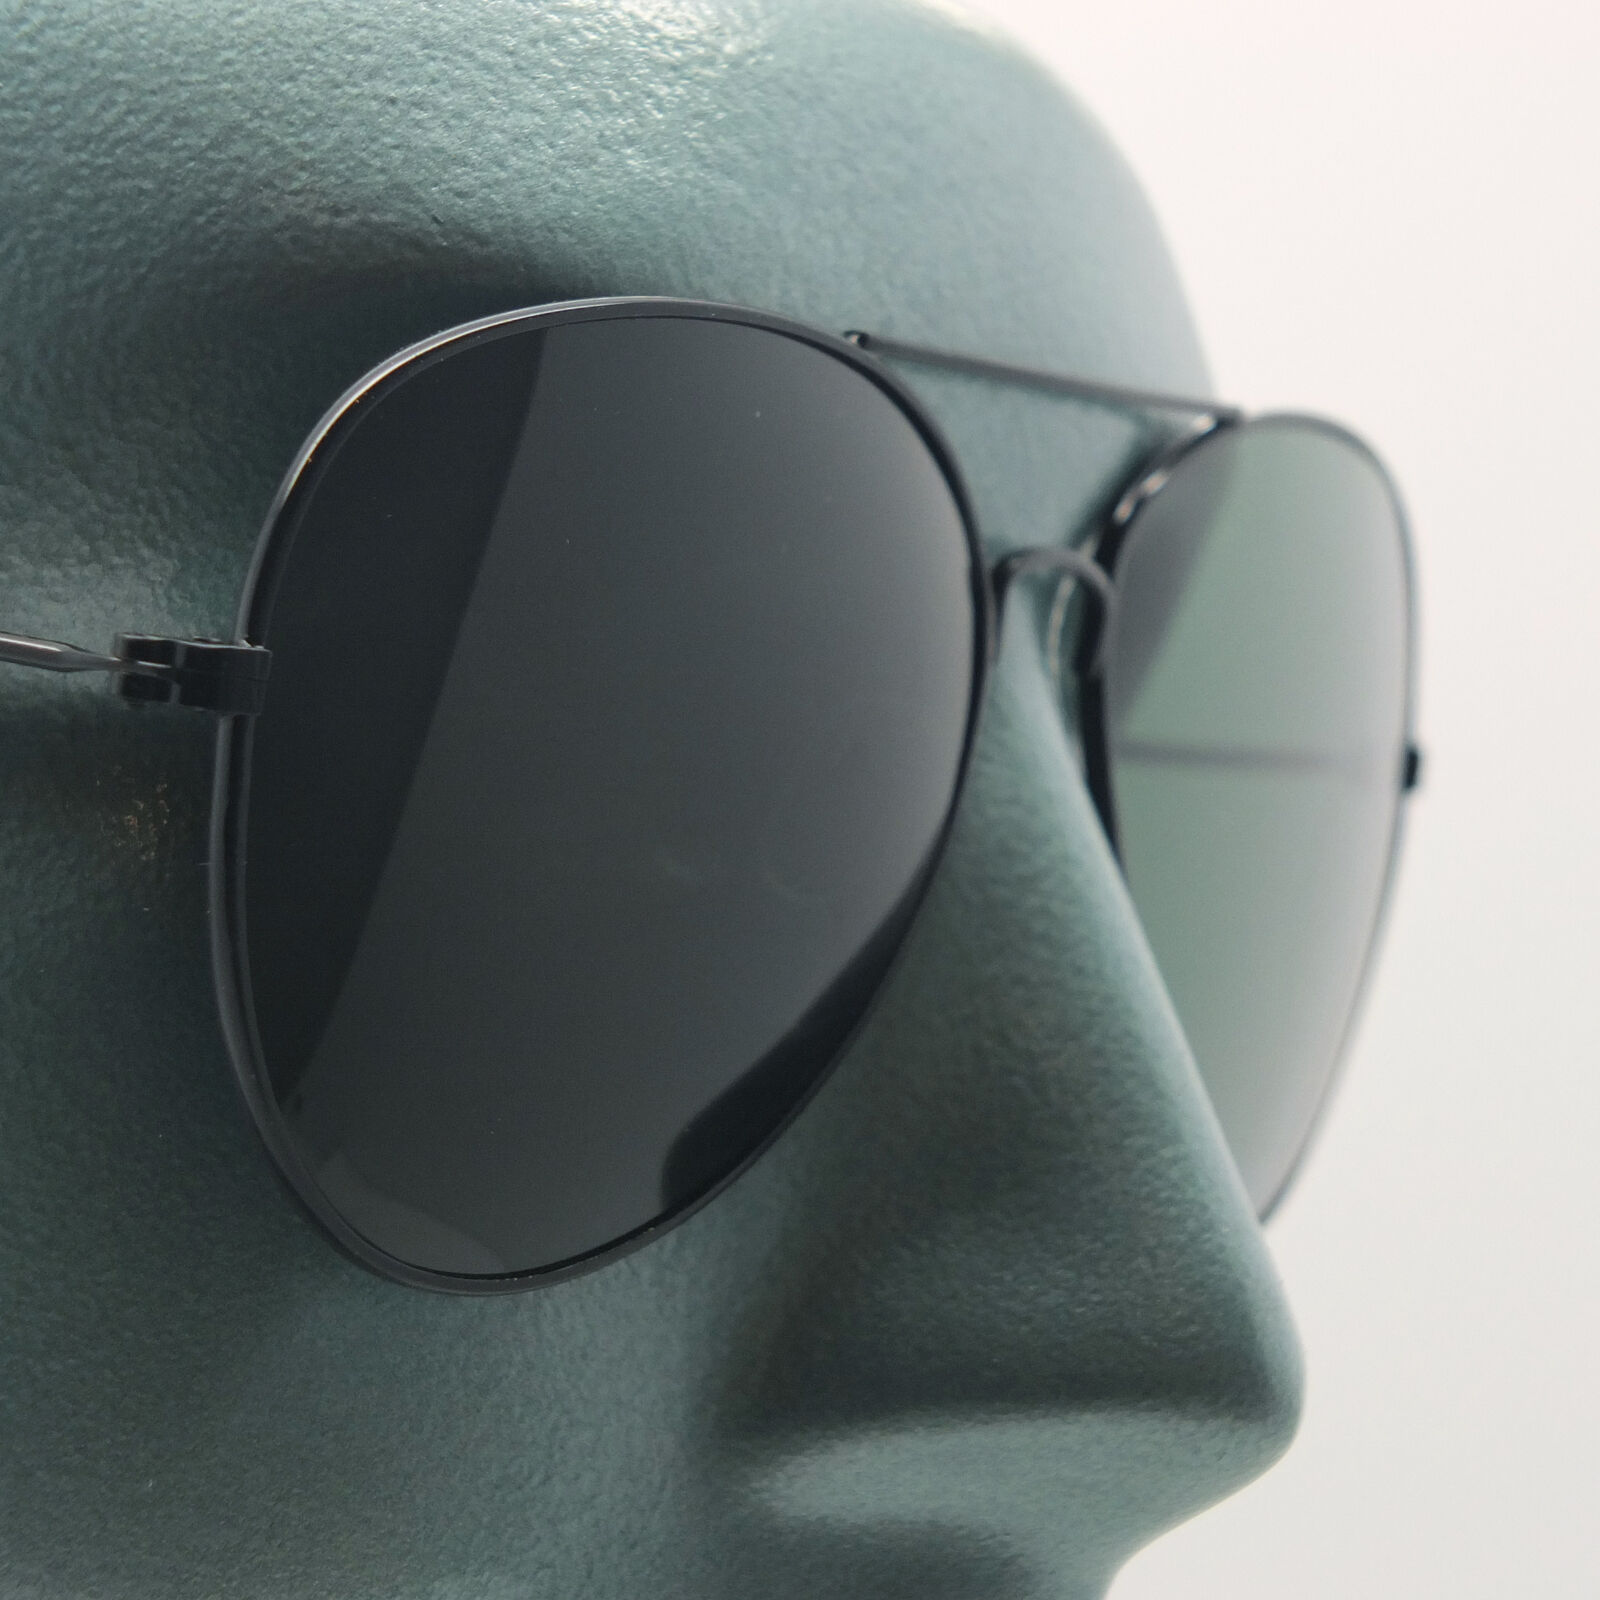 True Glass Green Lens Classic Shades Phoenix Mall Aviator Blac Sun Import Sunglasses